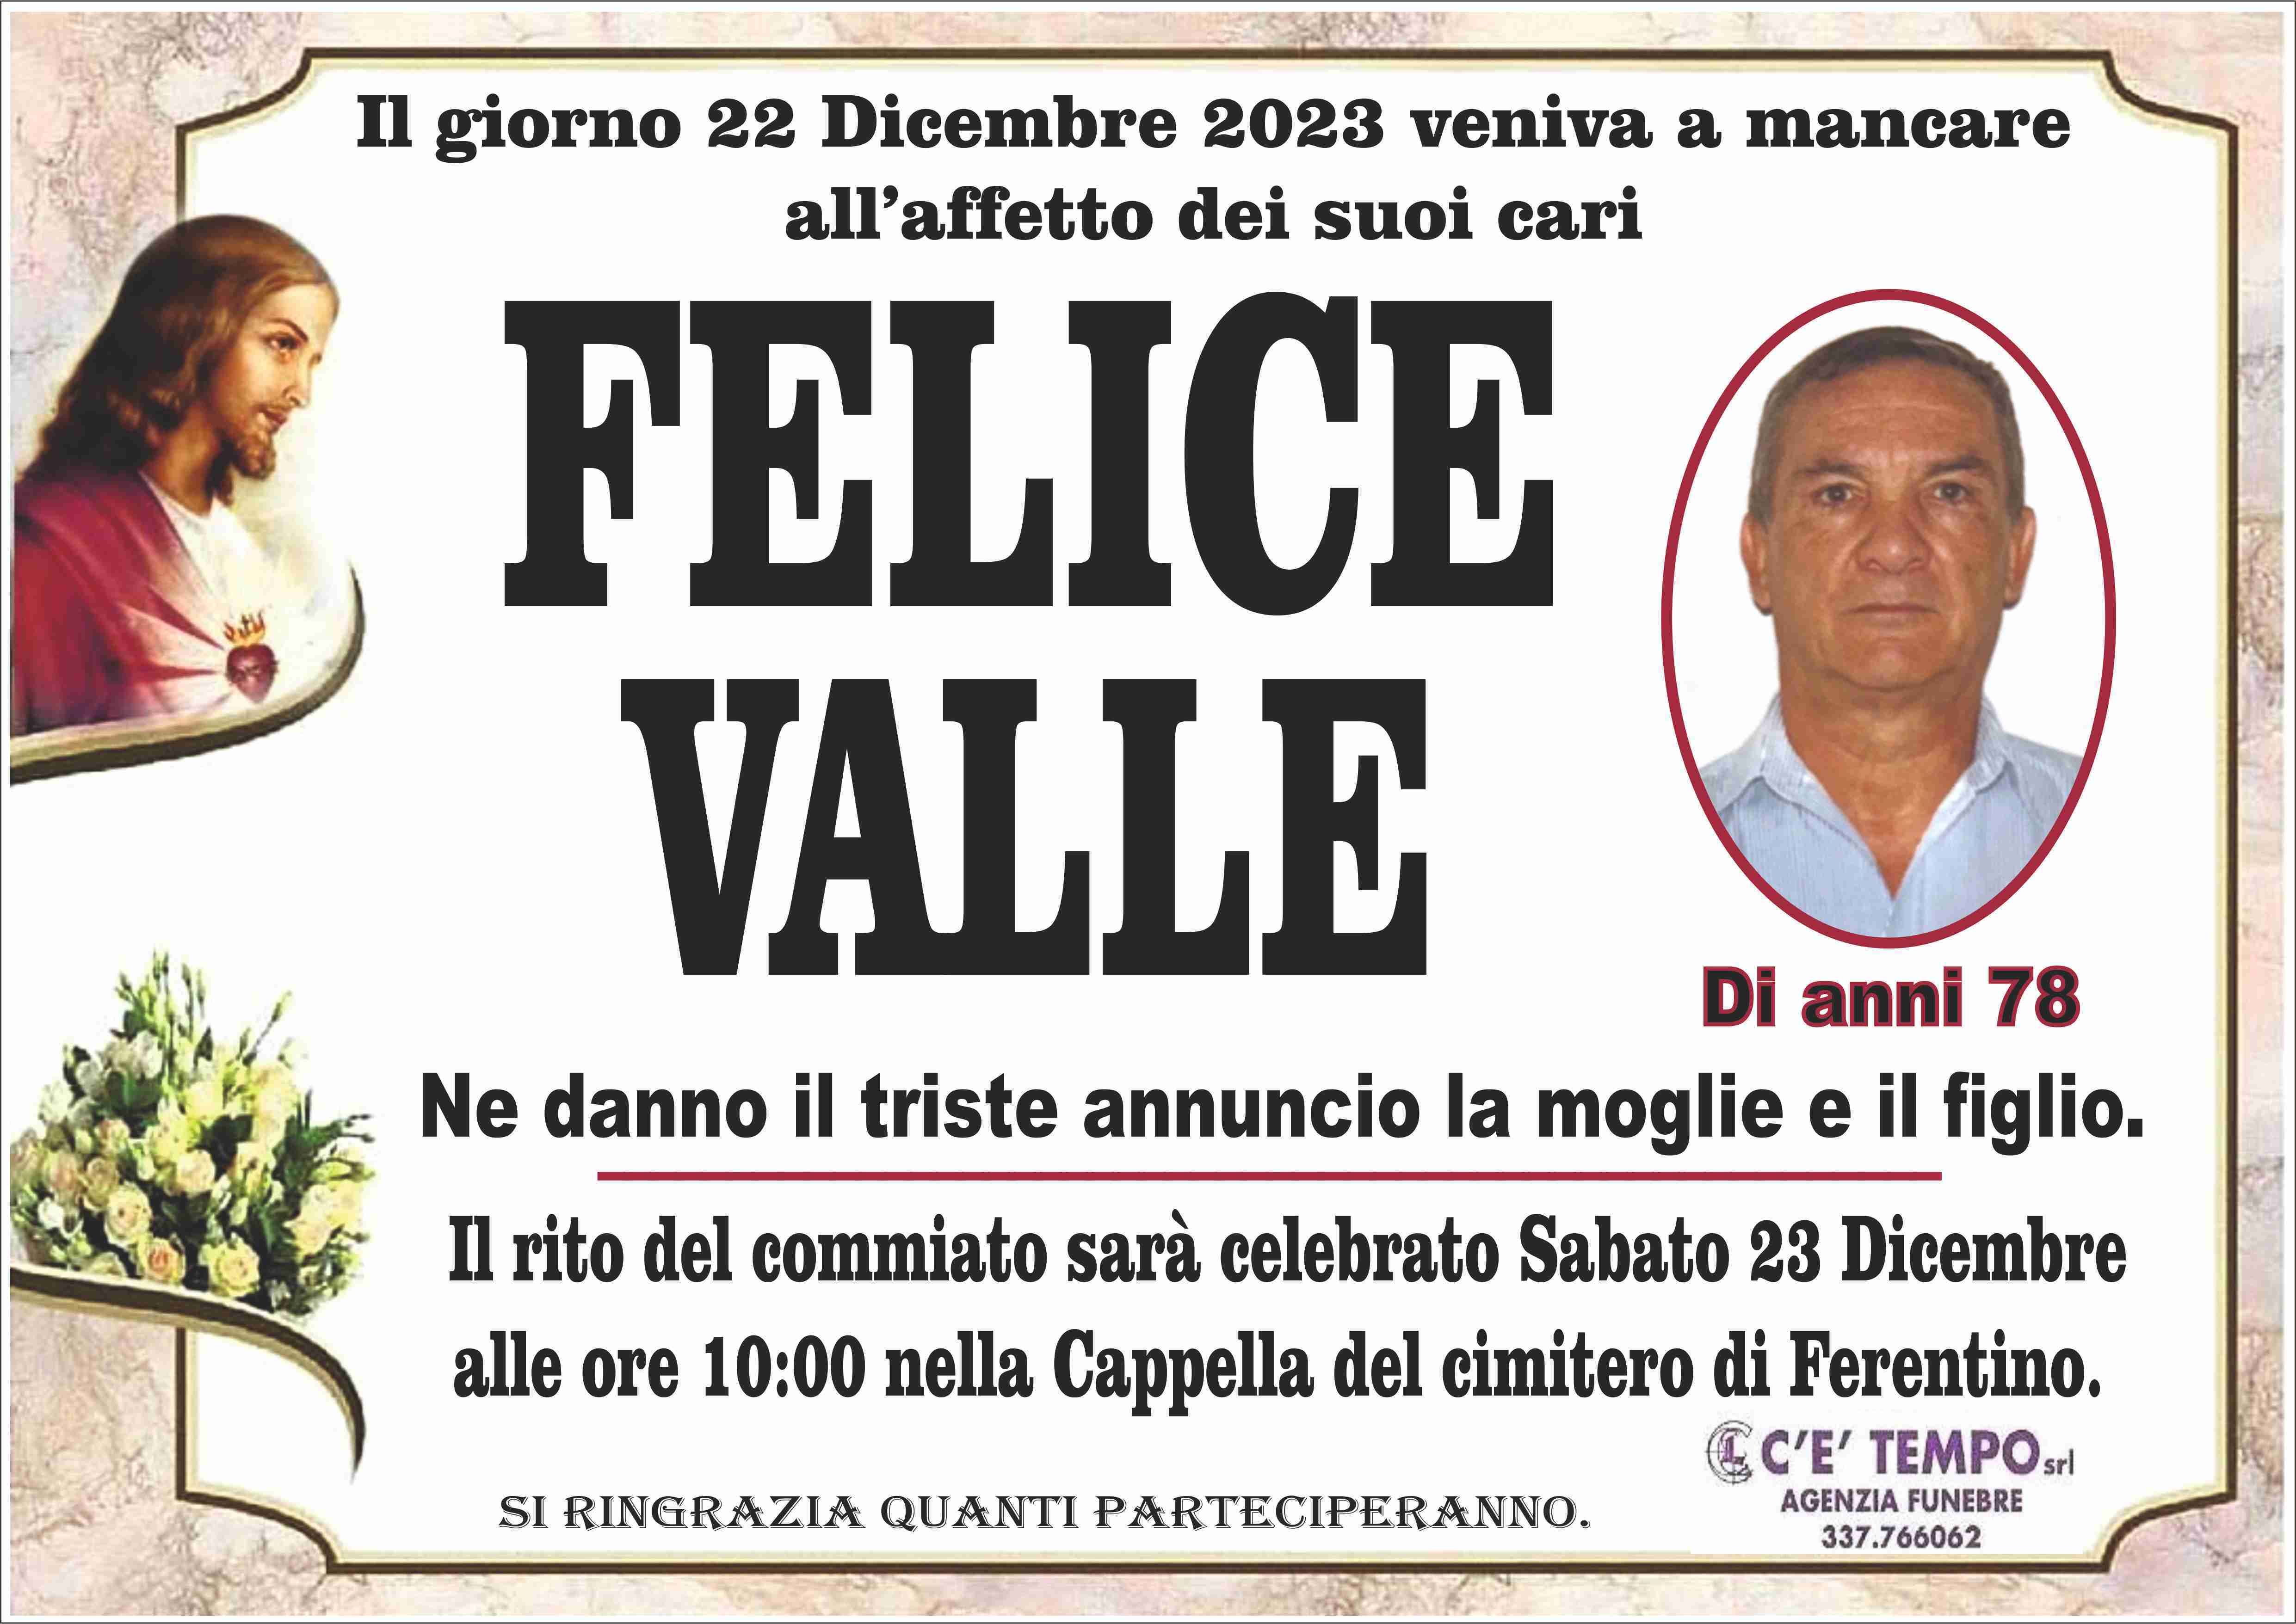 Felice Valle